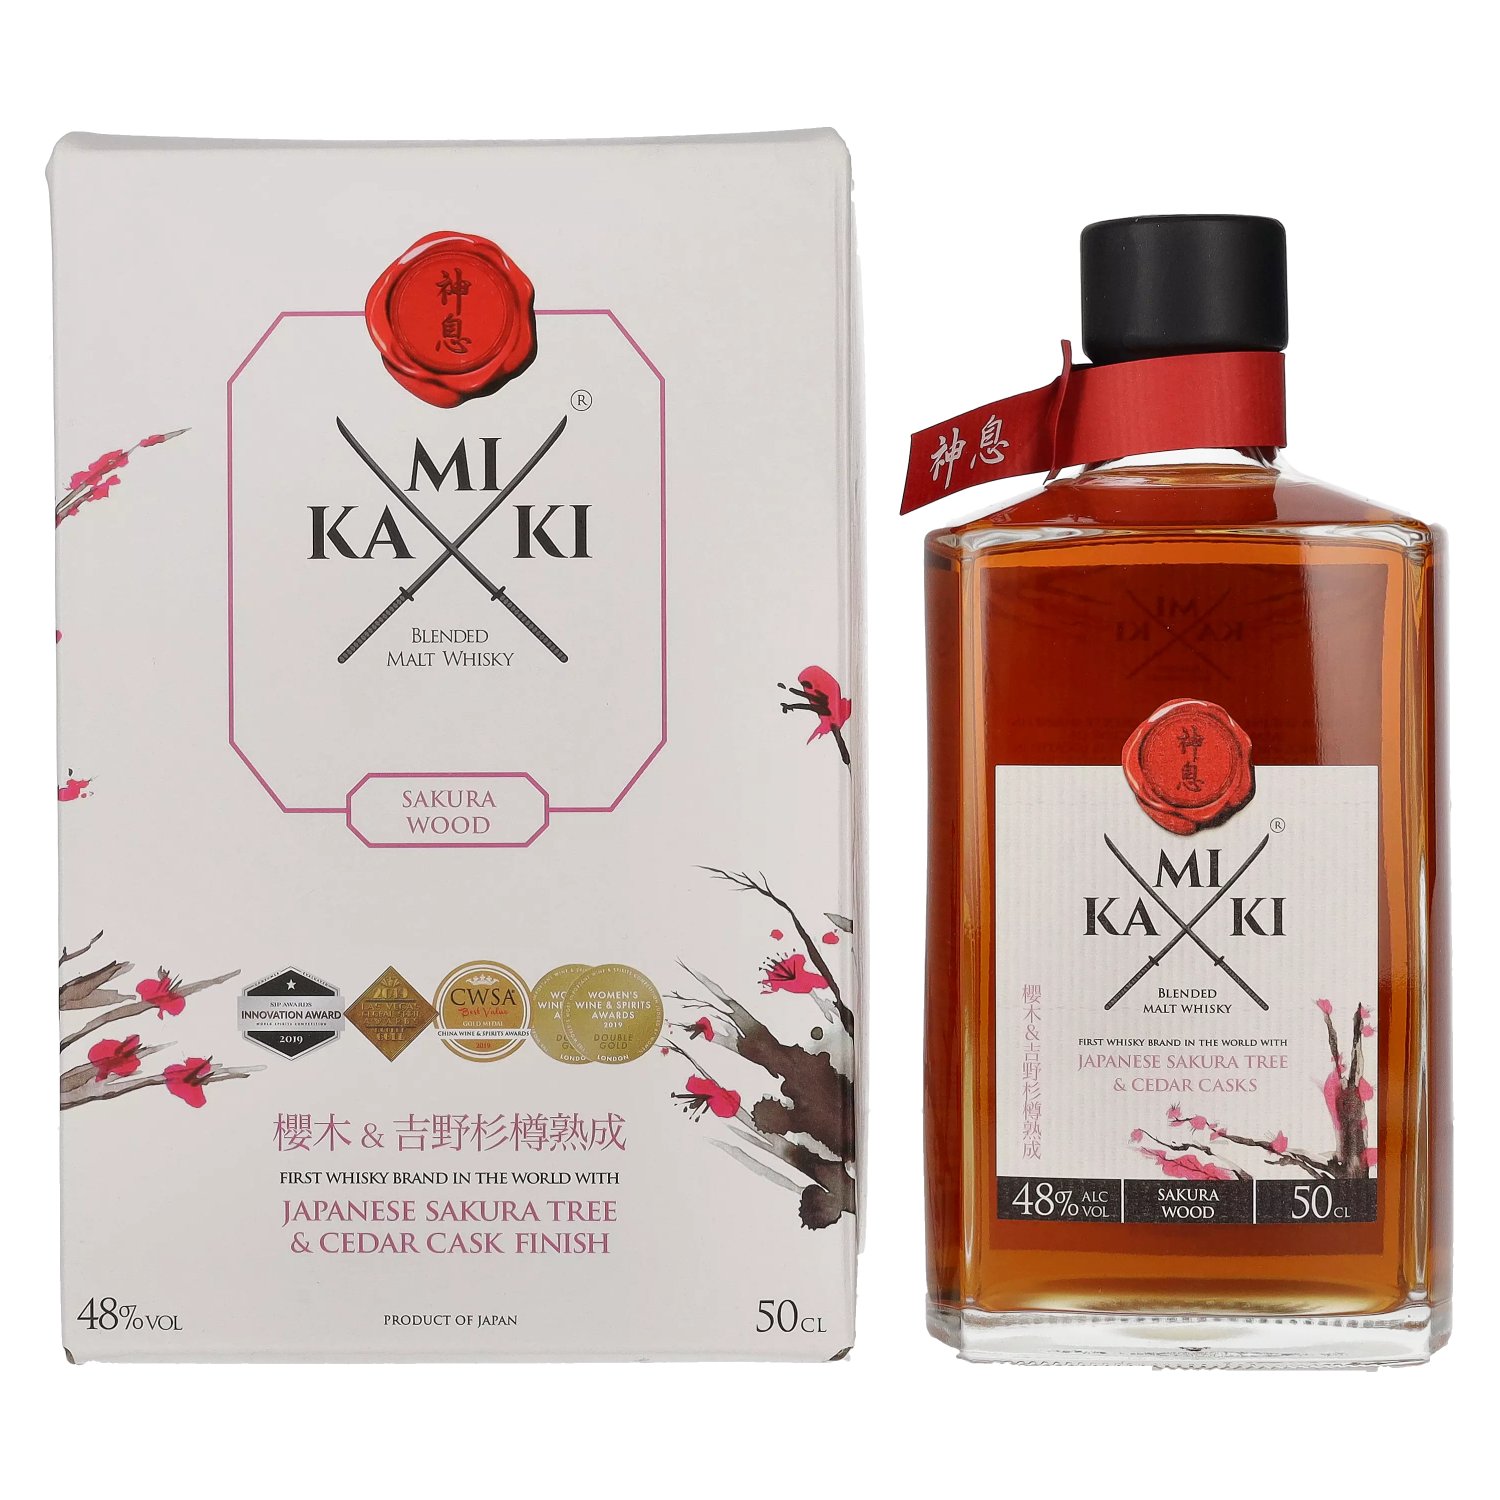 KAMIKI Blended Malt Whisky SAKURA CEDAR Cask Finish 48% Vol. 0,5l in Giftbox